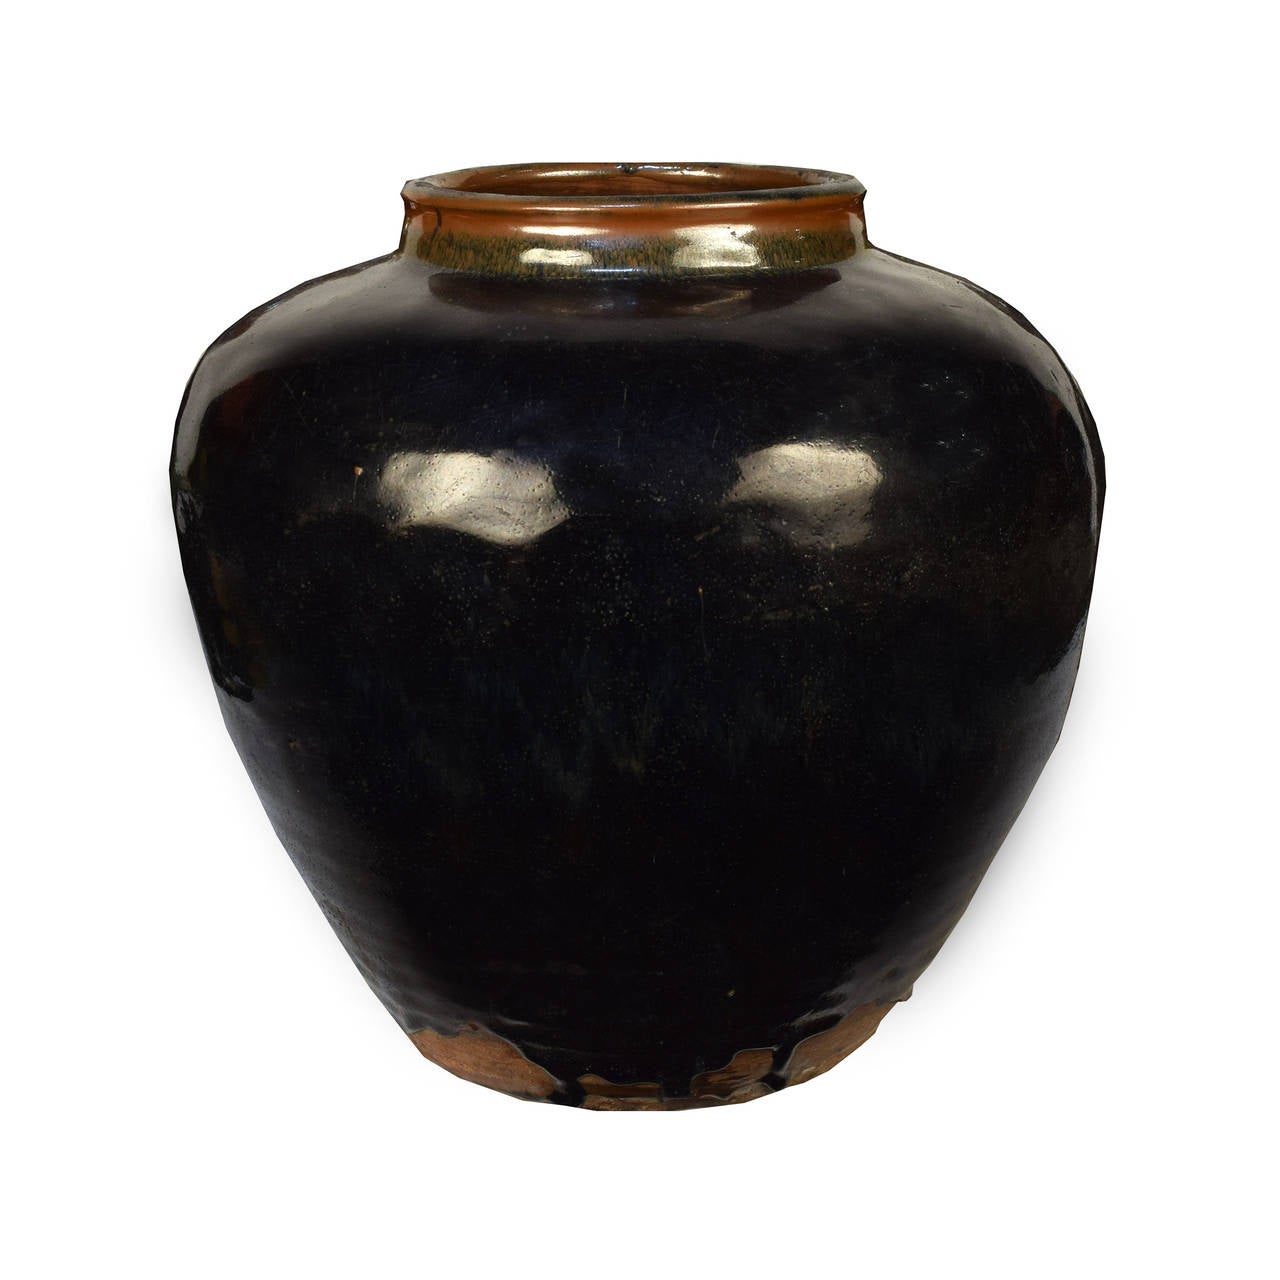 C. 1900 black glazed ceramic wine vessel from Northern China.

BJD088